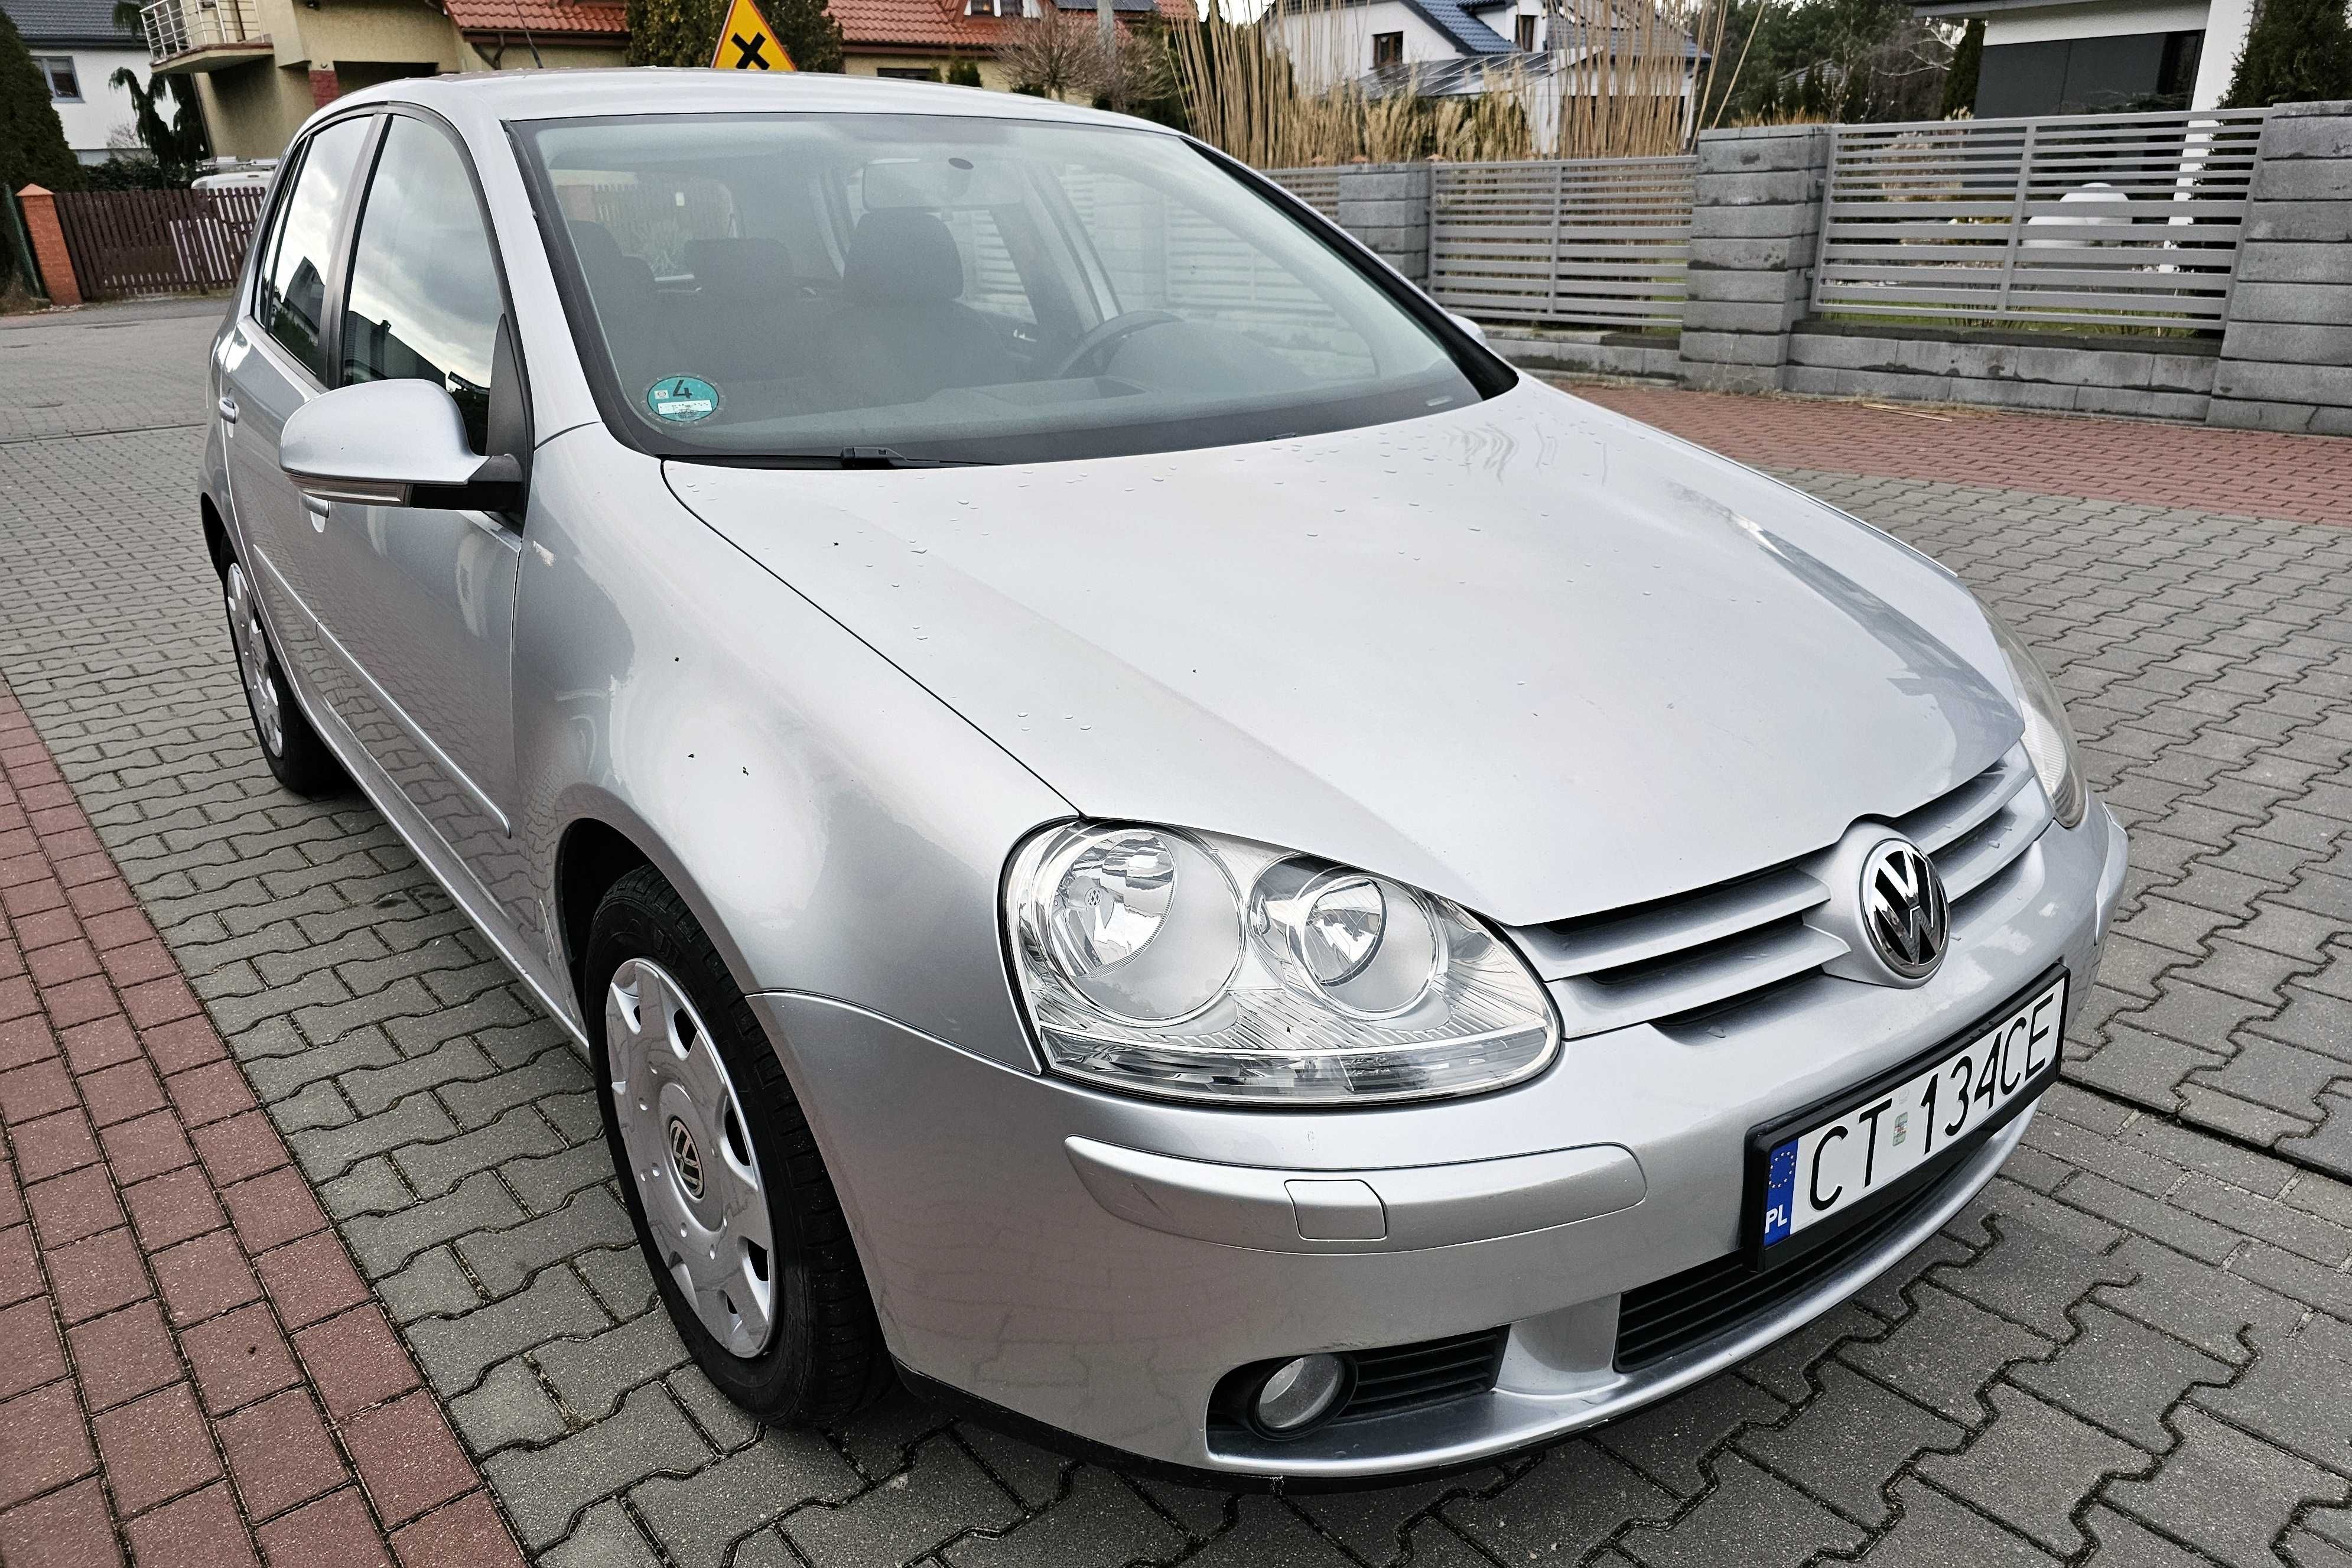 VW Golf 5 V AUTOMAT DSG 2007 rok 1,9 TDI 105 kM 5 drzwi 265200 KM